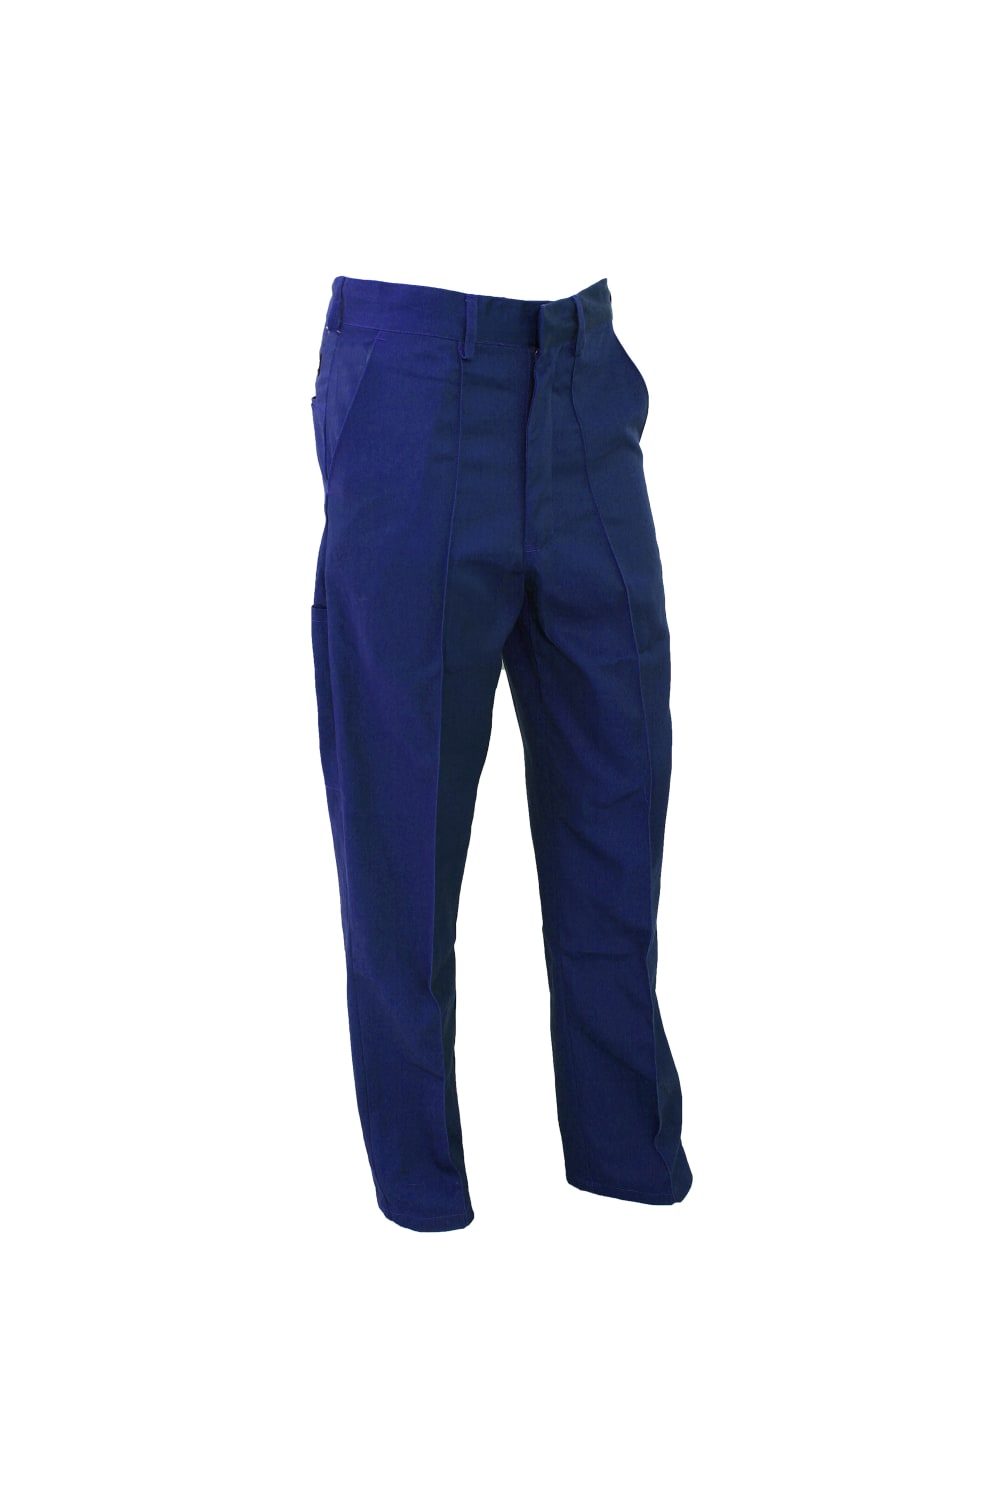 Dickies Redhawk Trousers (Tall) / Mens Workwear (Royal)